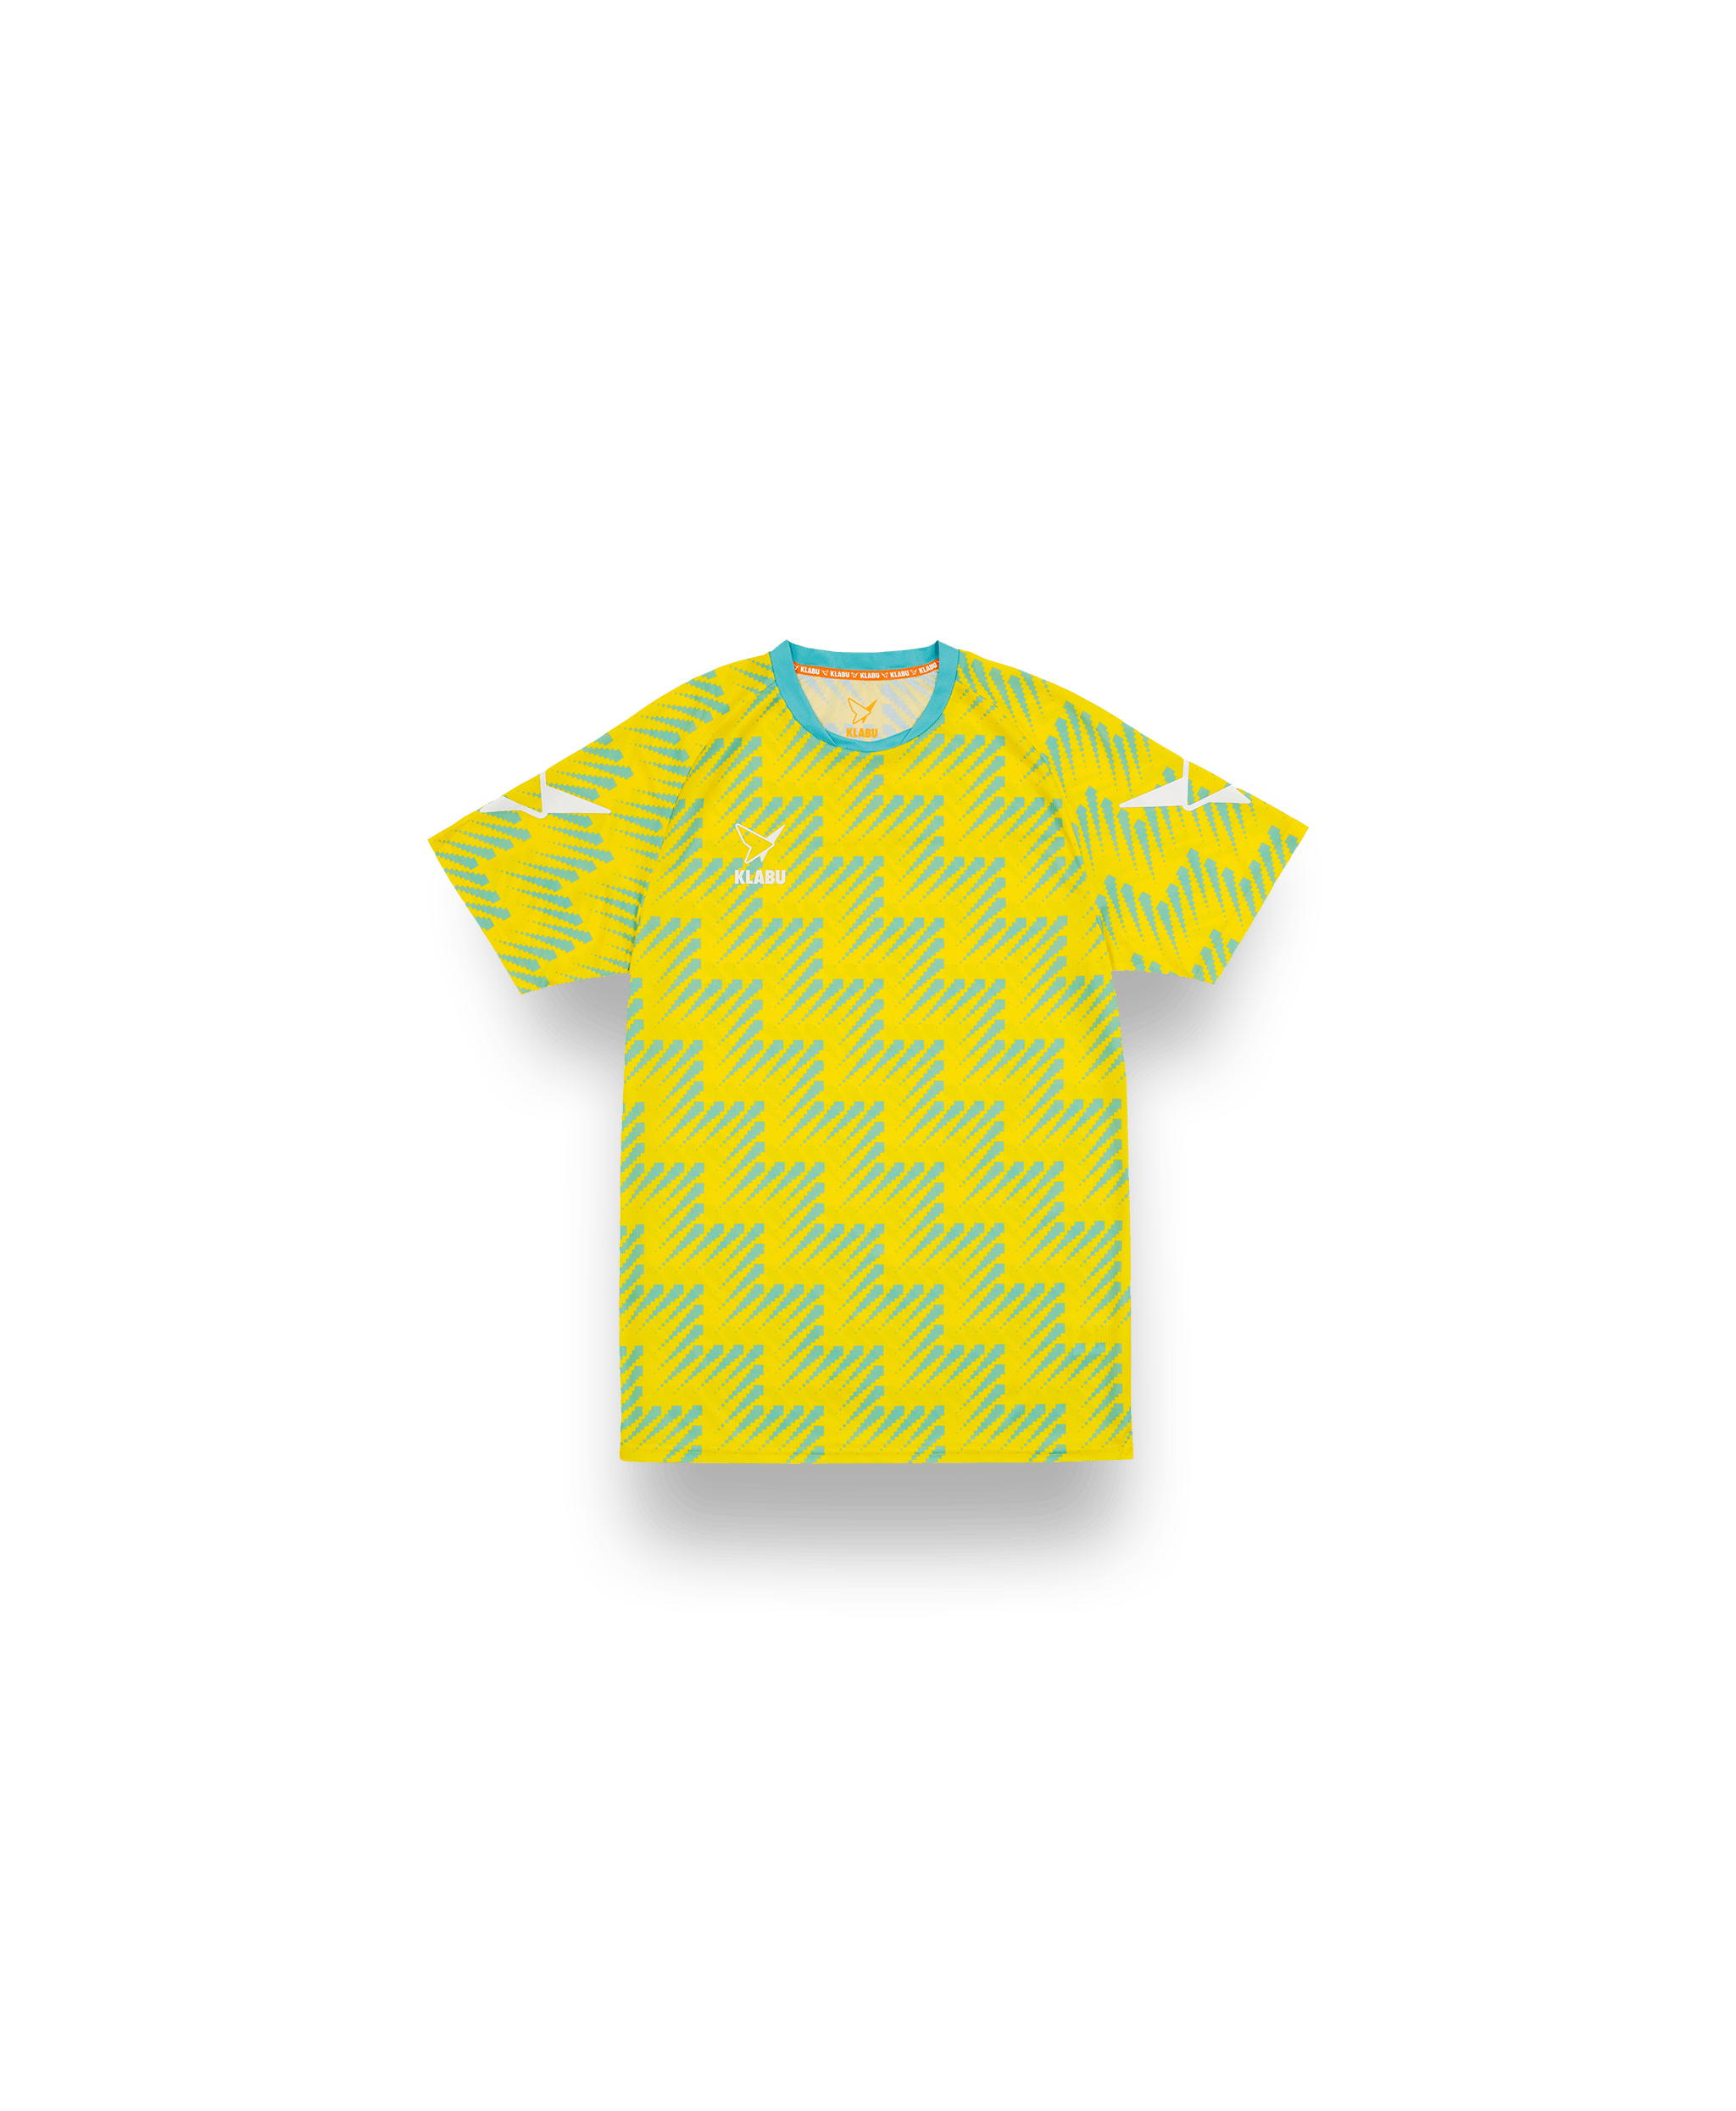 KLABU Teamwear Shirt Yellow